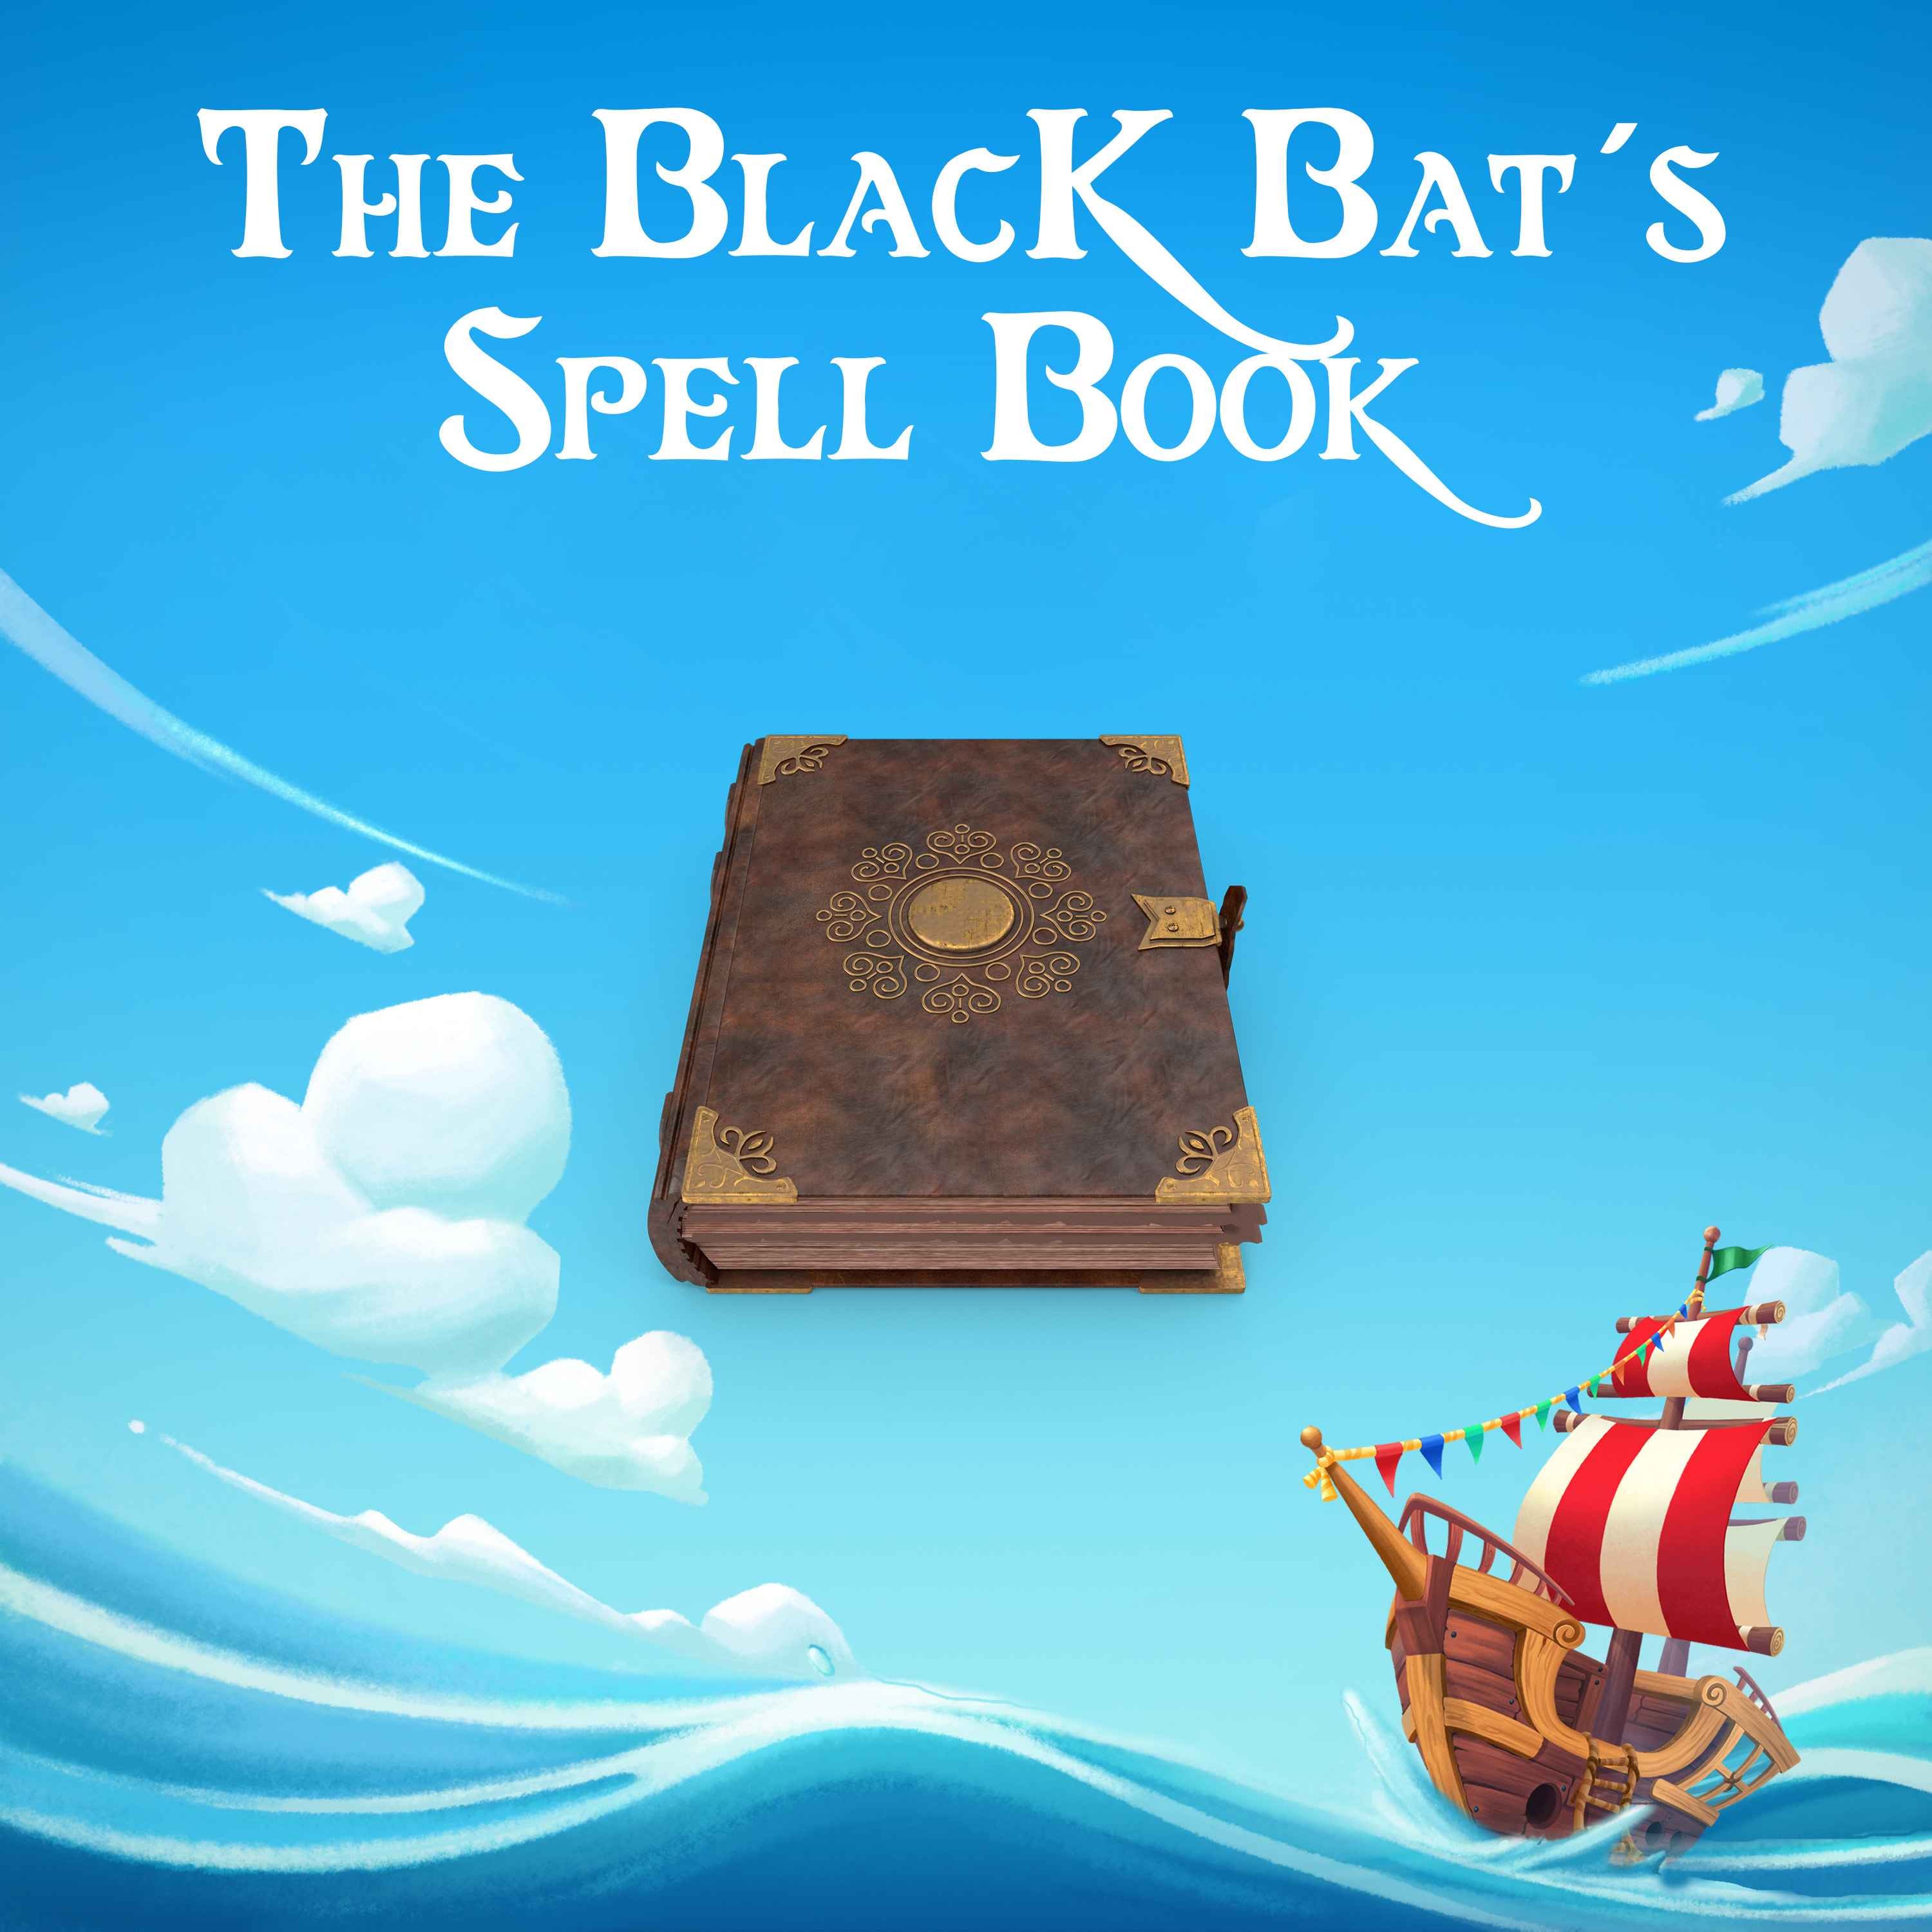 The Black Bat’s Spell Book